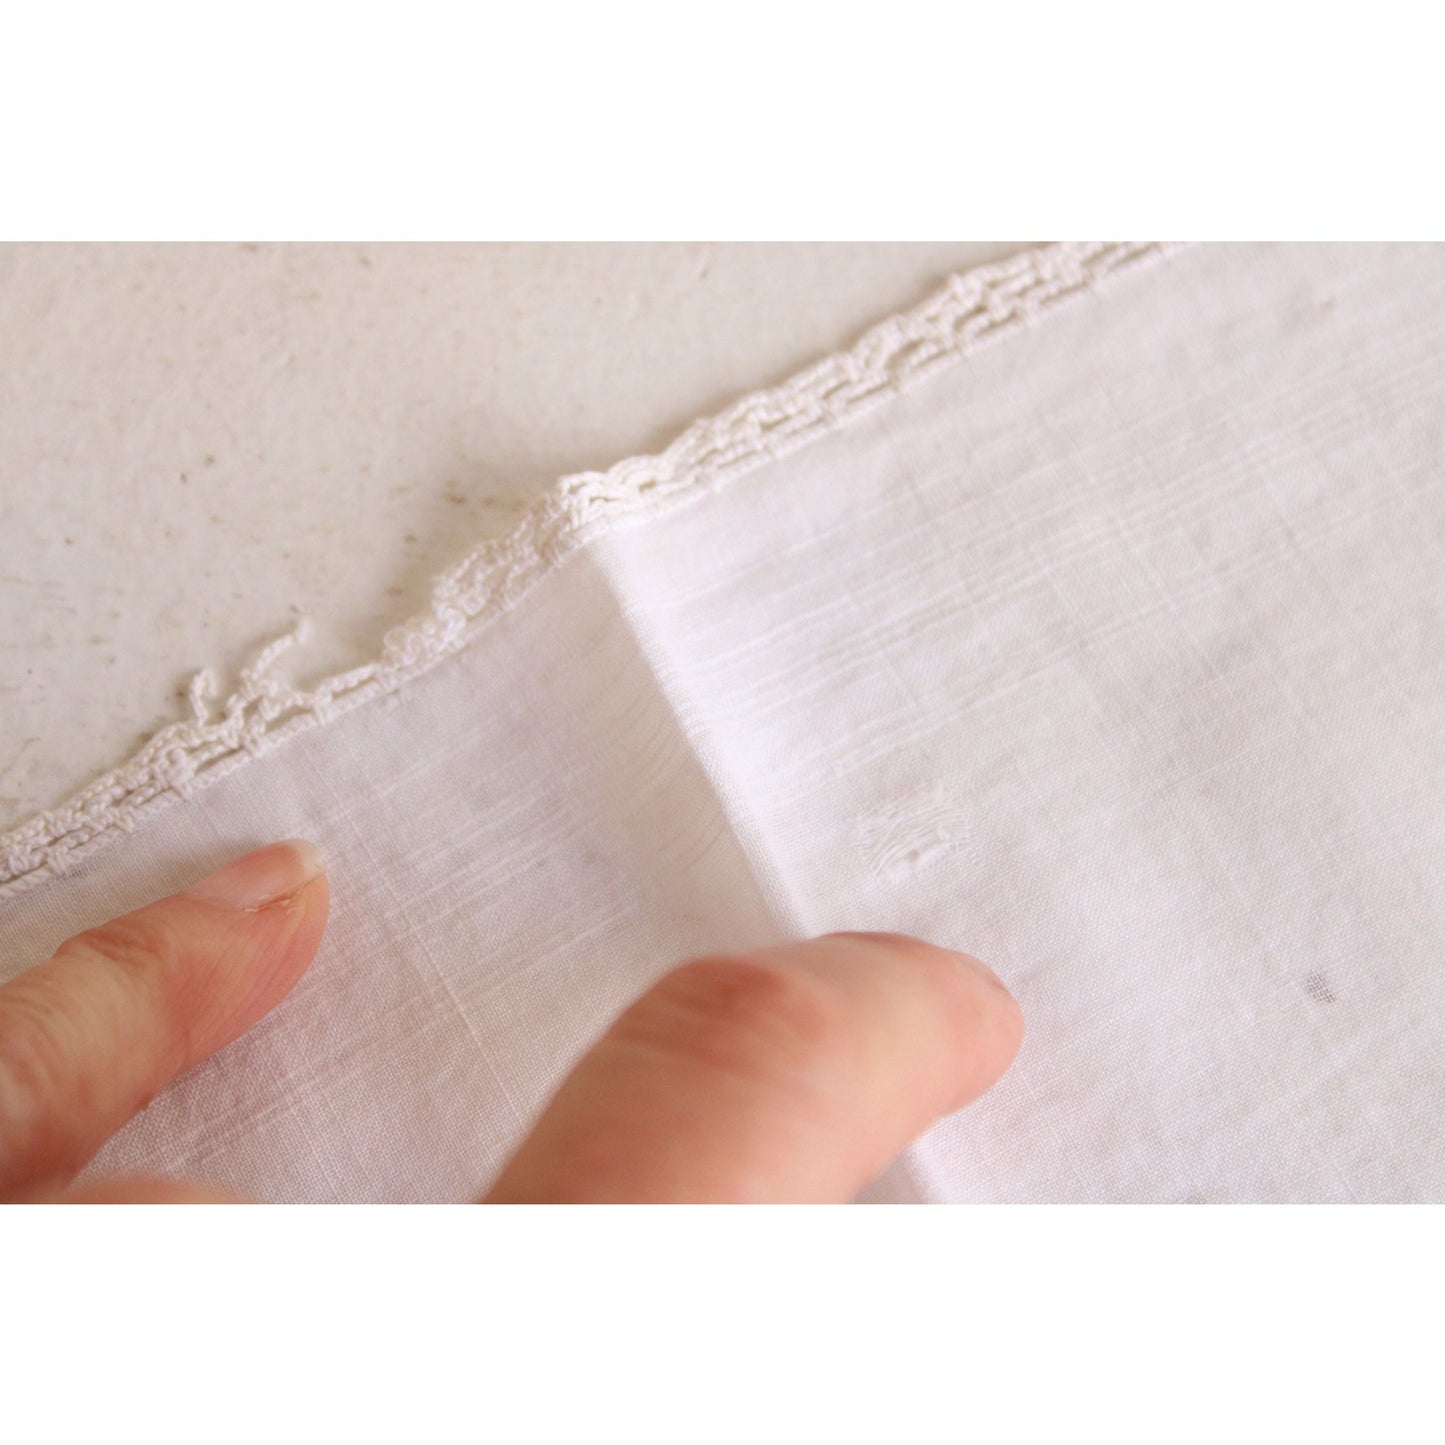 Vintage Handkerchief in White Cotton, Monogrammed with W